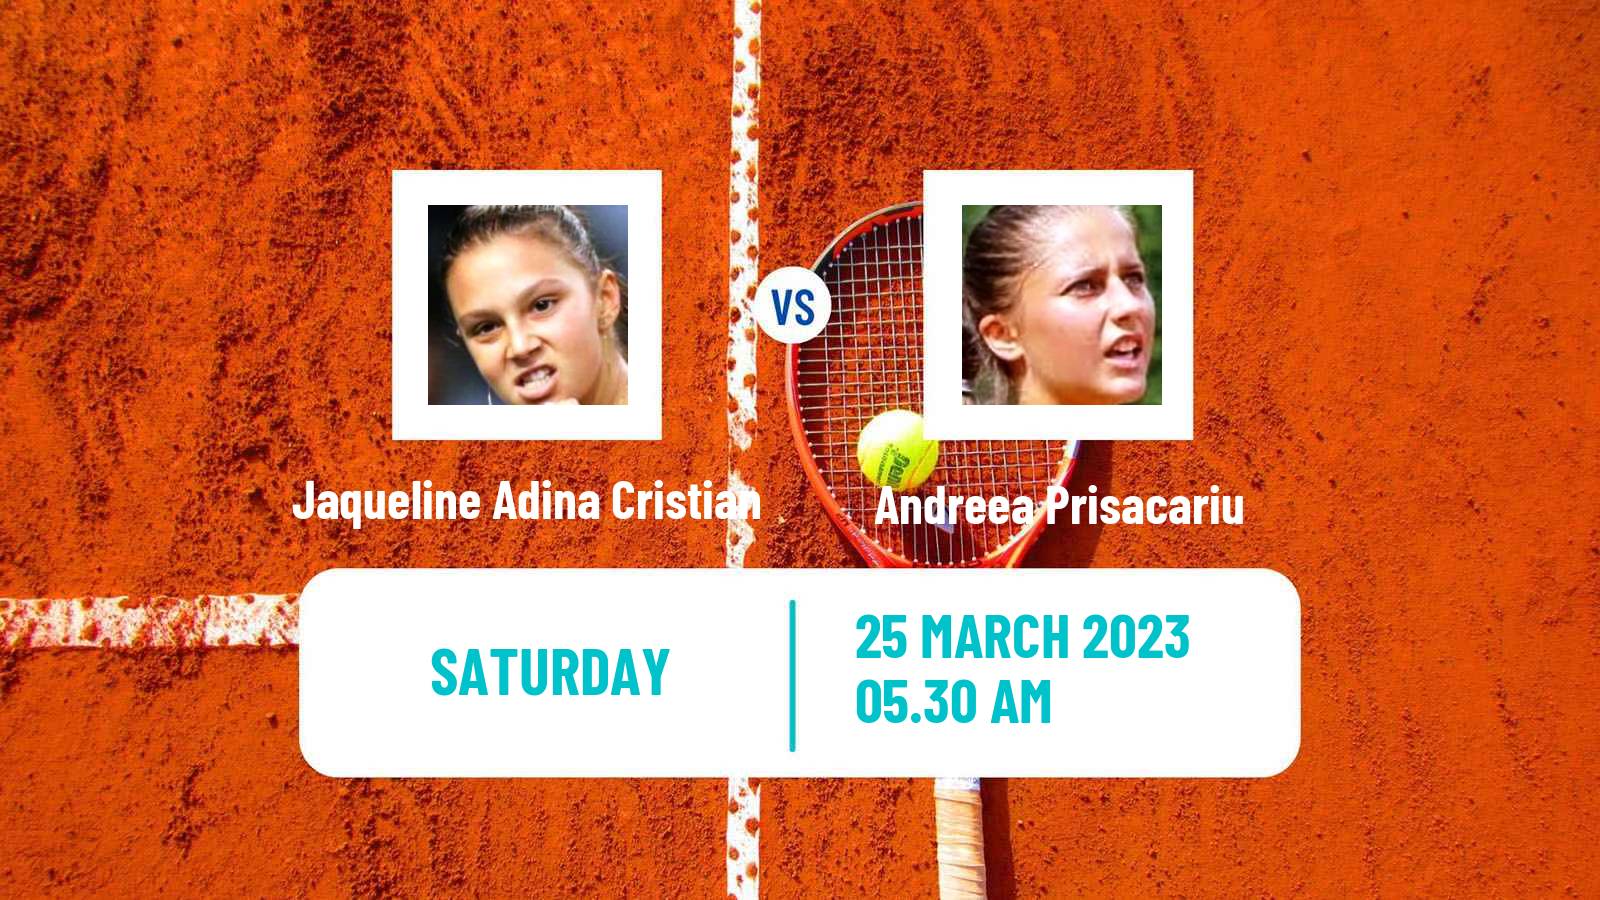 Tennis ITF Tournaments Jaqueline Adina Cristian - Andreea Prisacariu